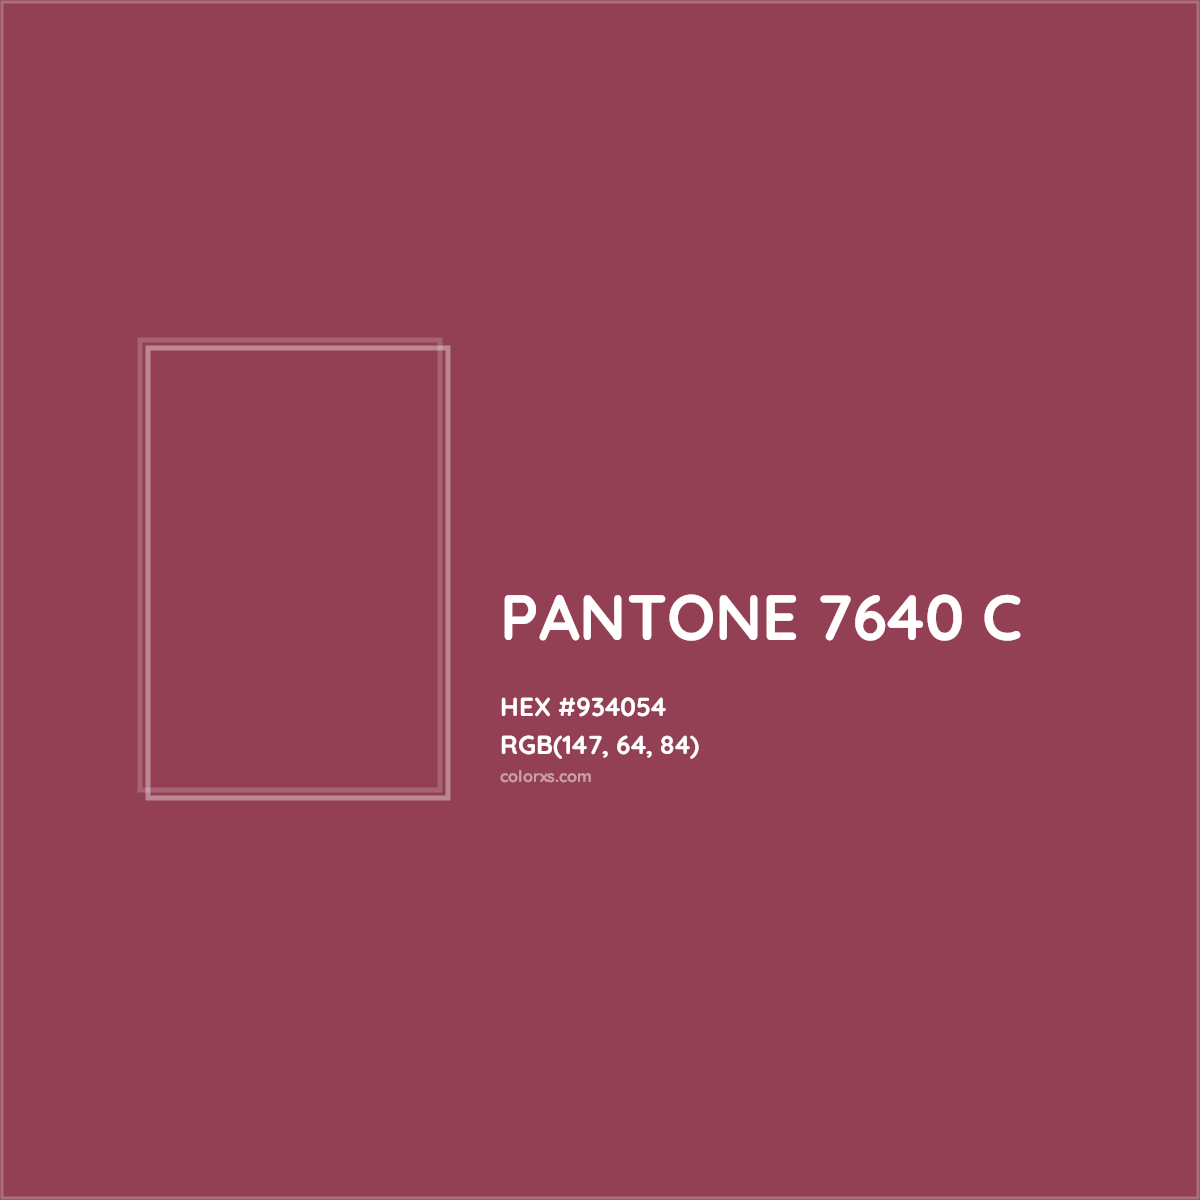 HEX #934054 PANTONE 7640 C CMS Pantone PMS - Color Code